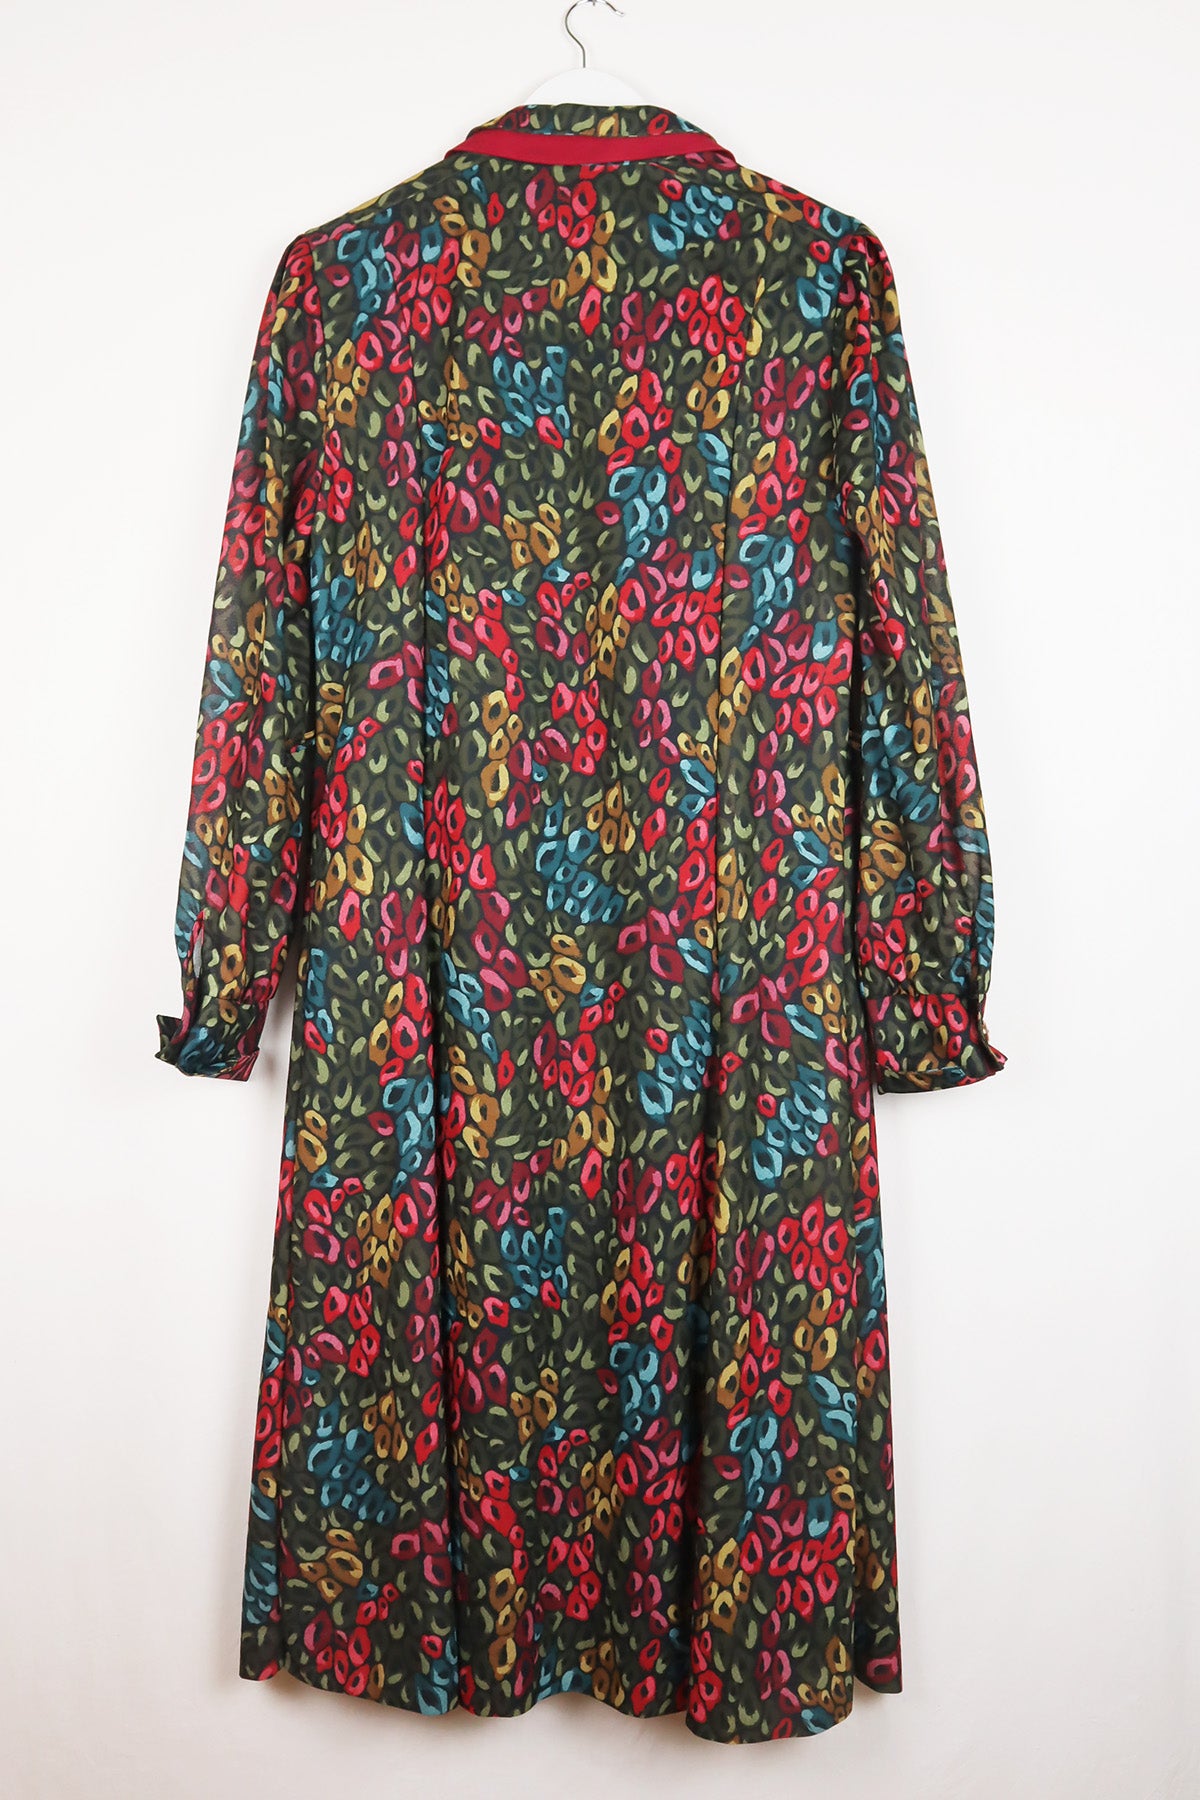 Kleid Vintage Bunte Kreise ( Gr. M/L )